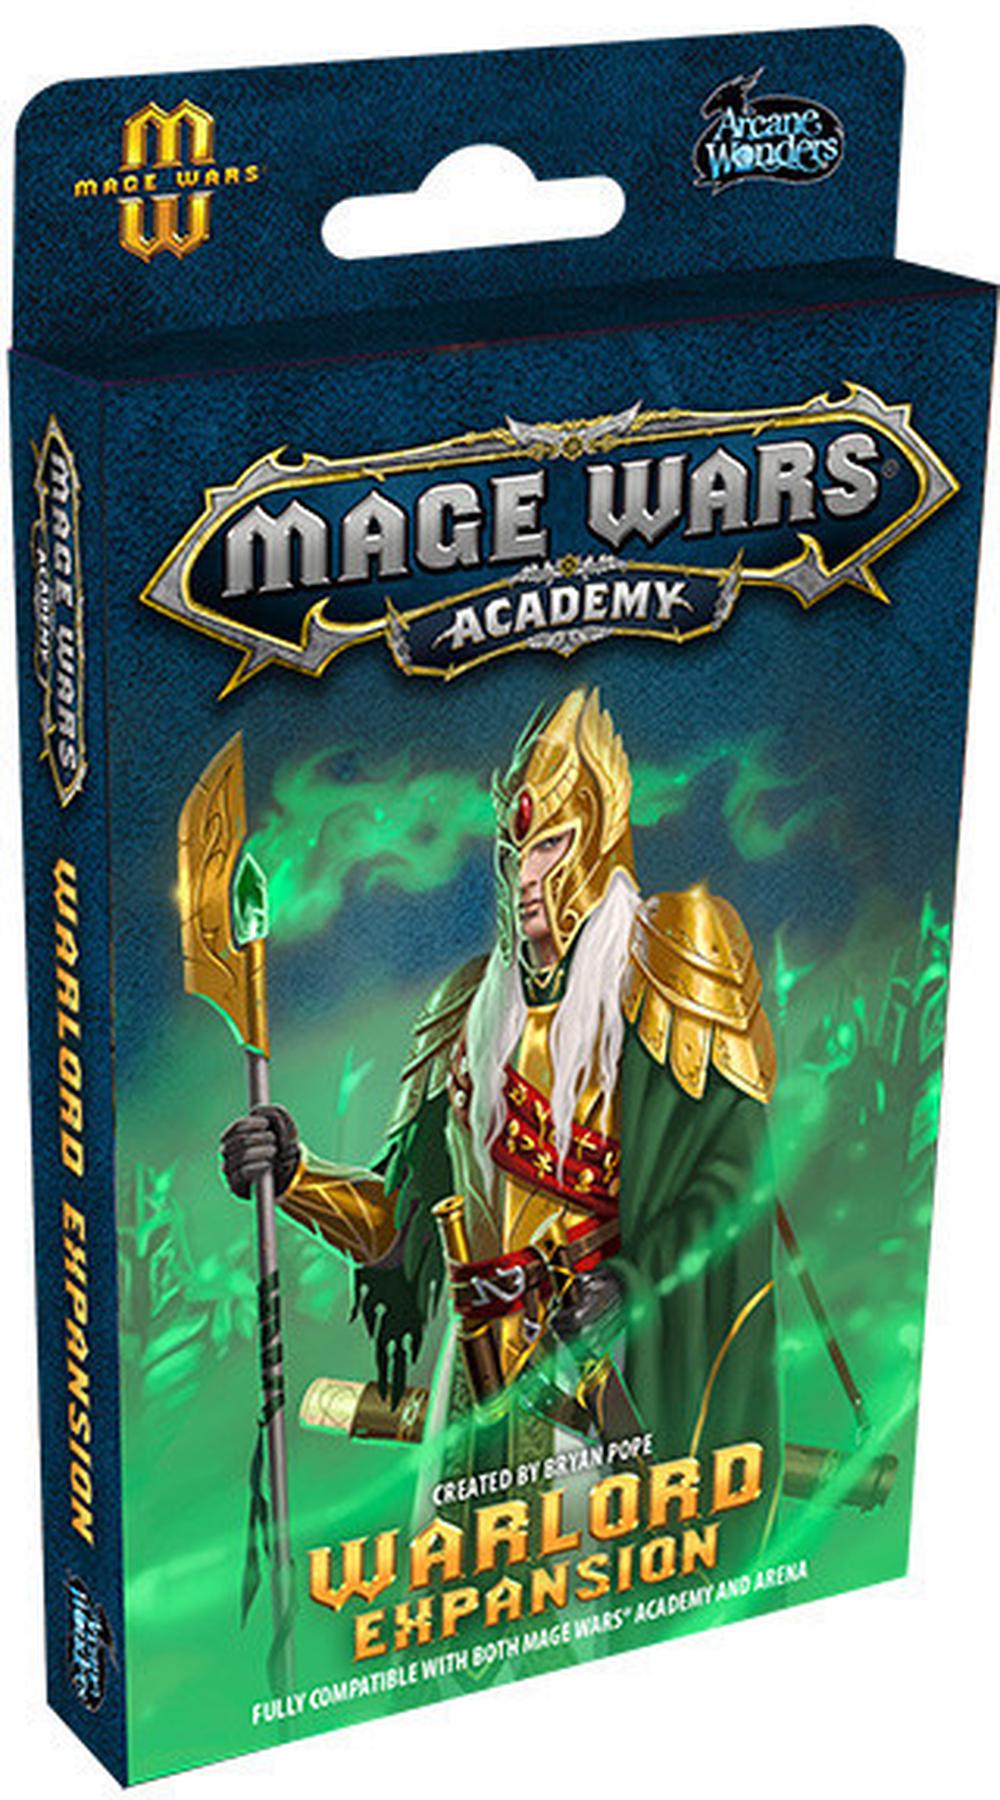 Arcane Wonders Mage Wars Arena Lost Grimoire Volume 1 Card Game for sale online 